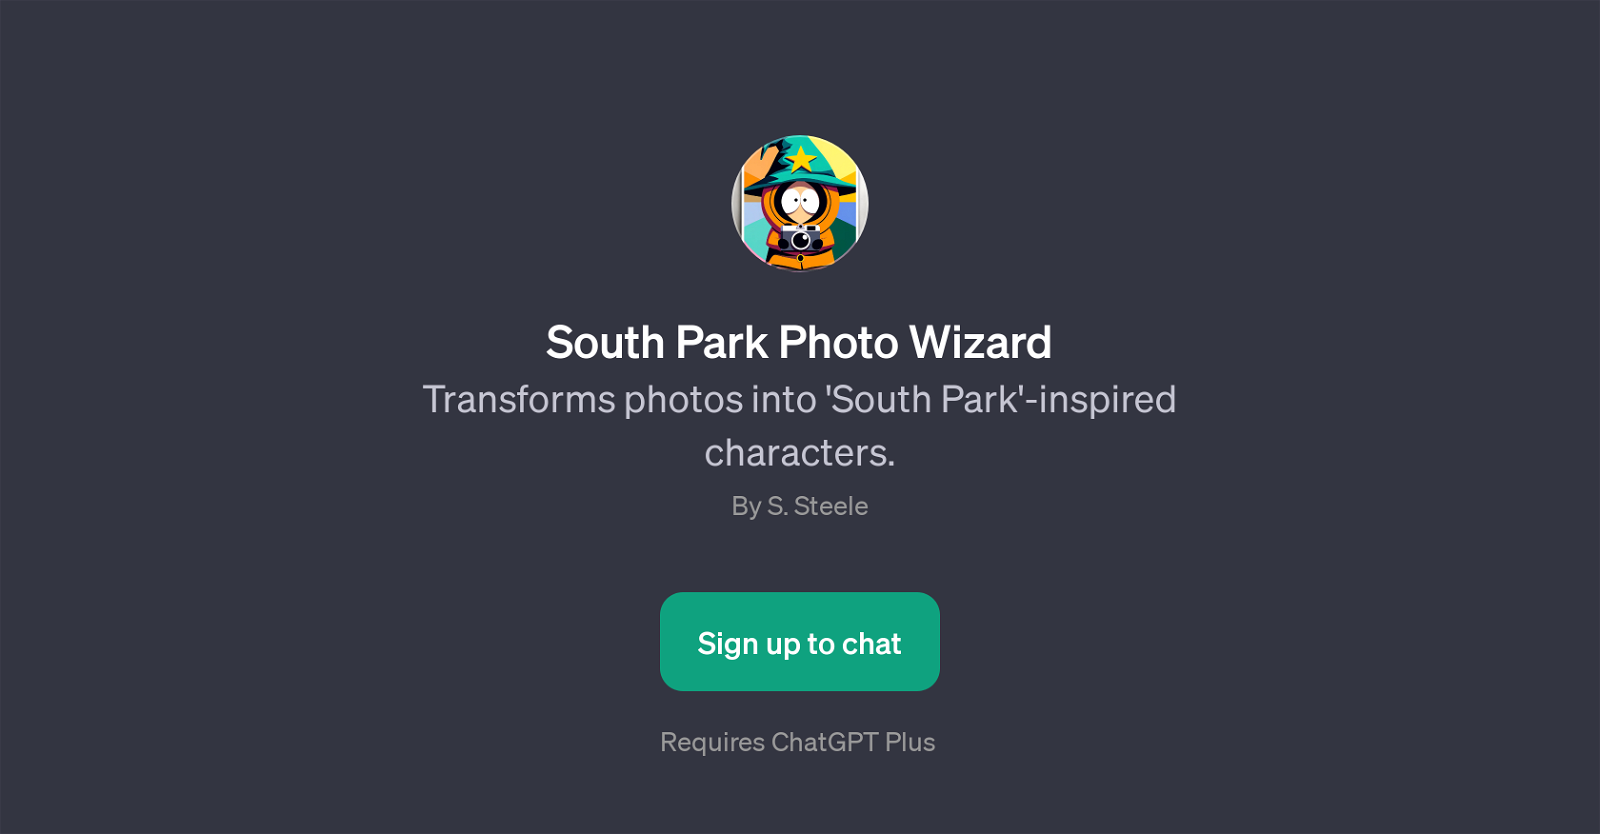 South Park Photo Wizard website